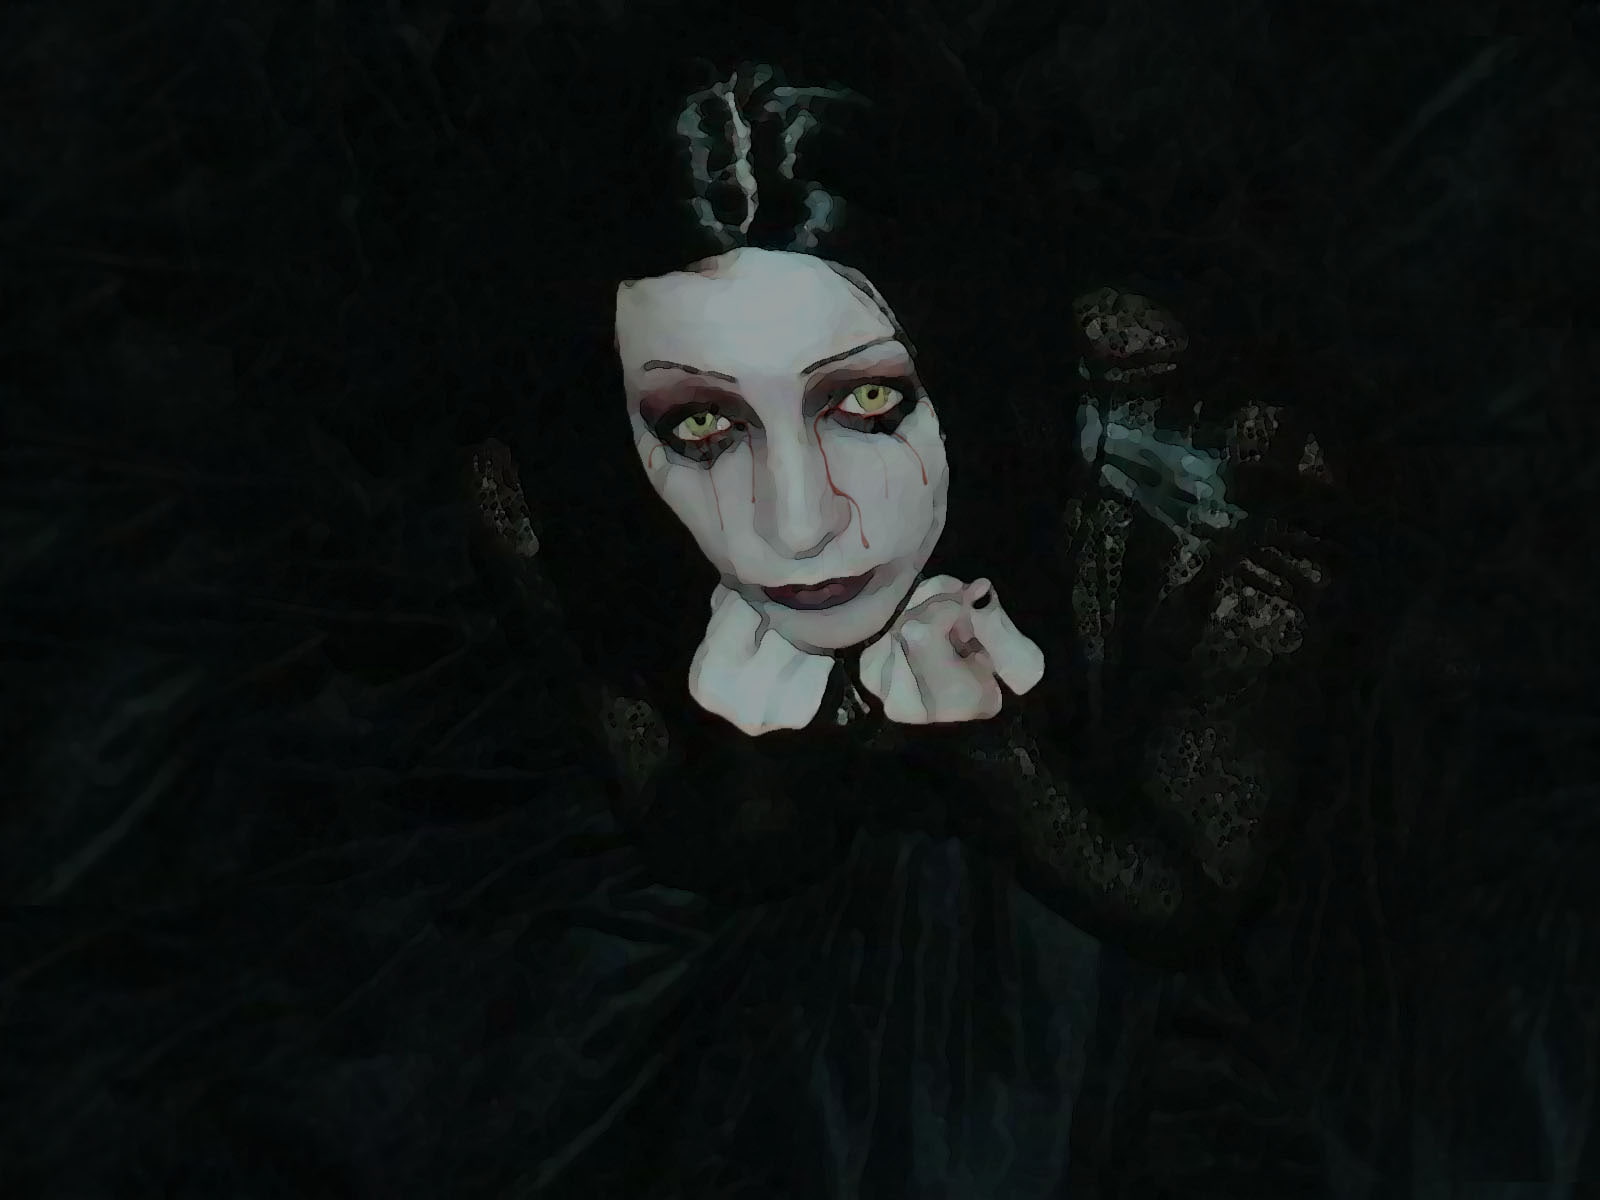 Dark, girl, goth, Gothic, loli, style, vampire, women, portrait